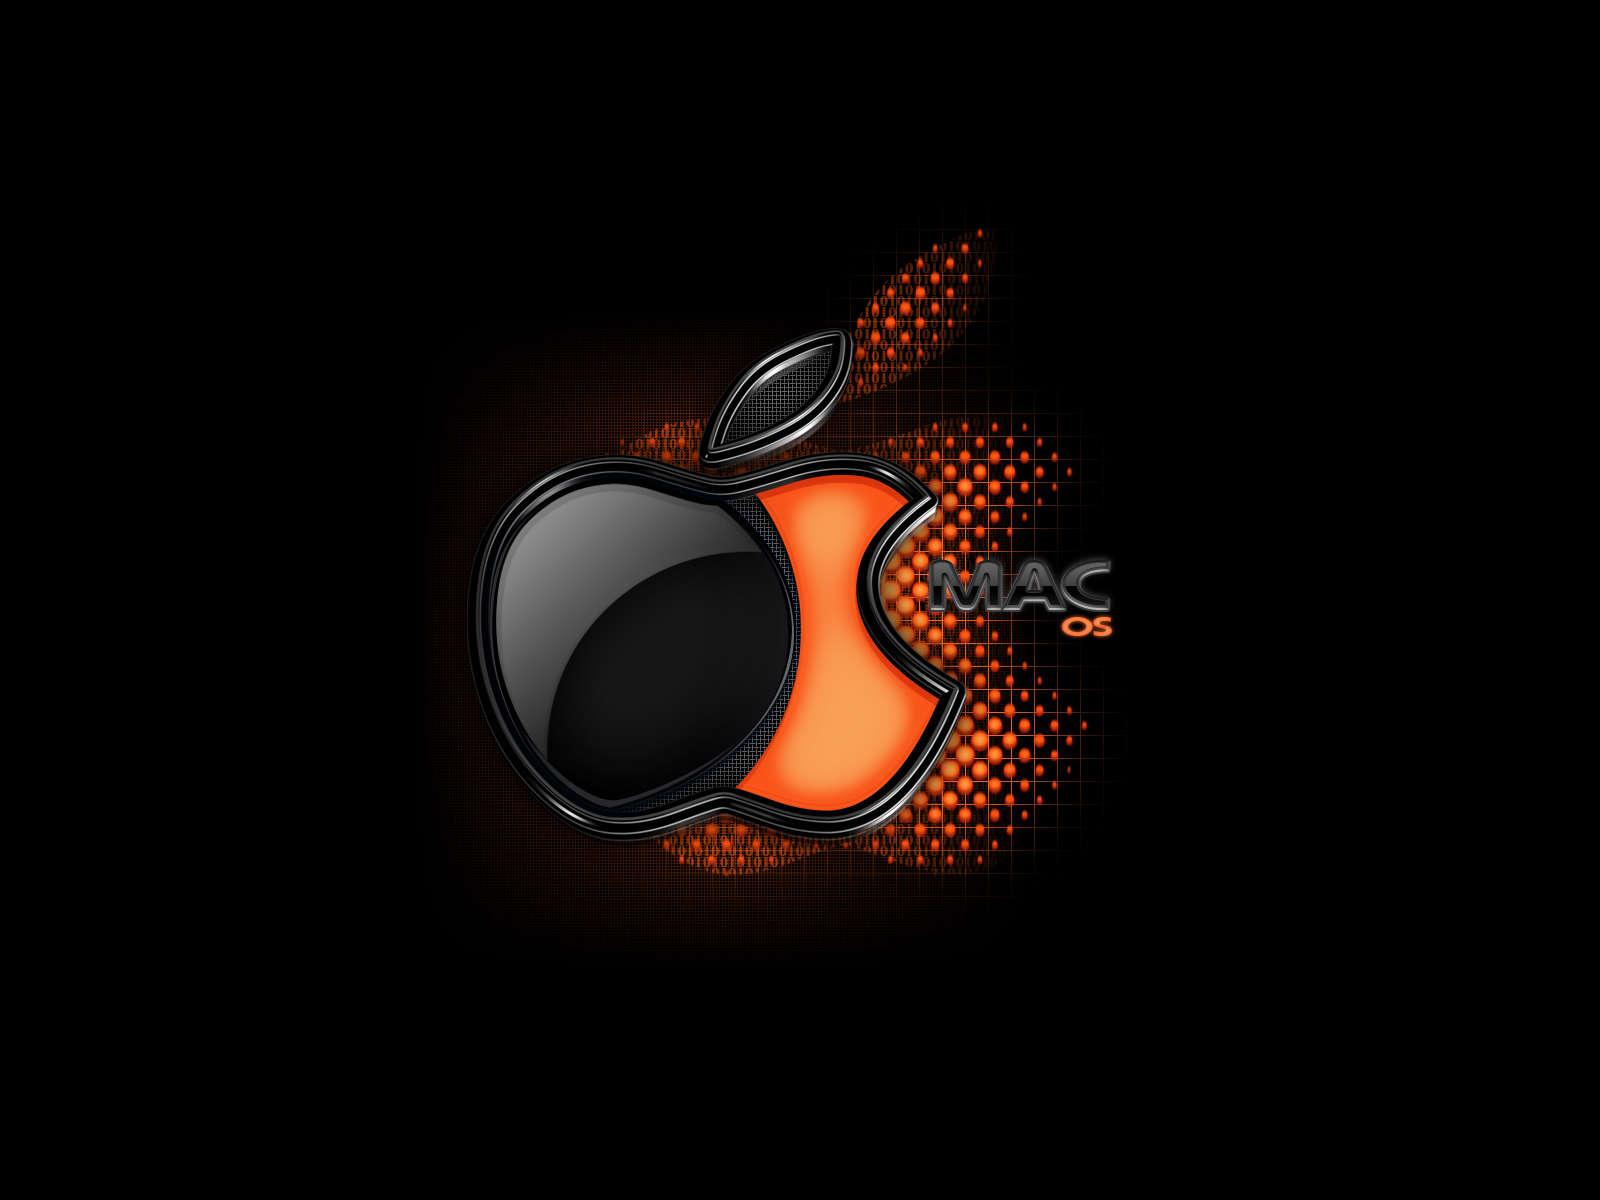 Free Images logos, background, black, apple Brands